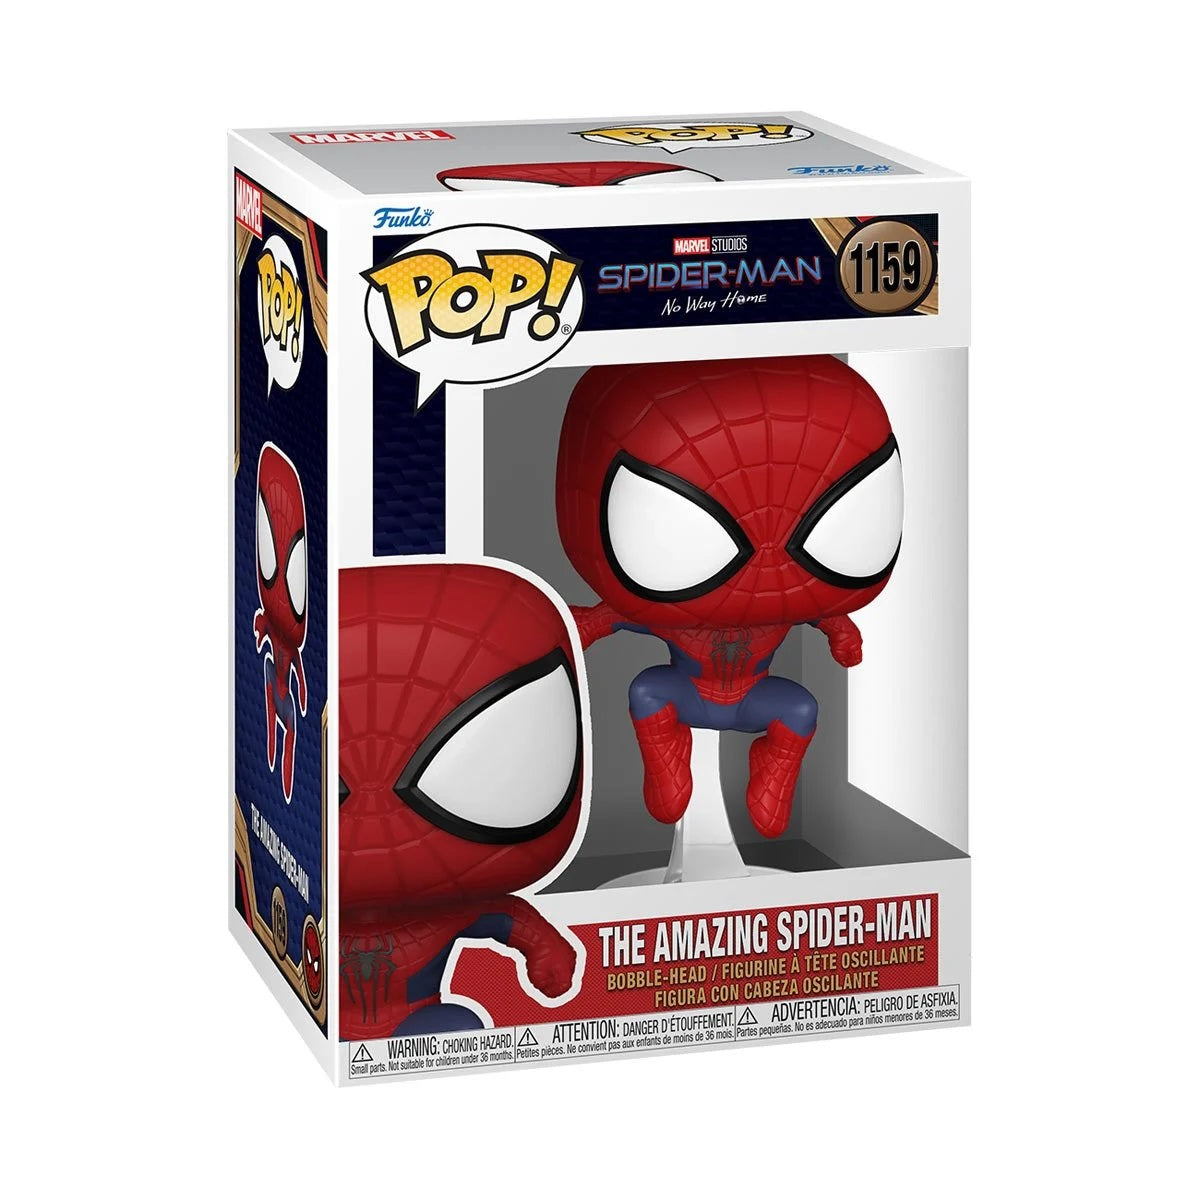 The Amazing Spider Man - Funko Pop!